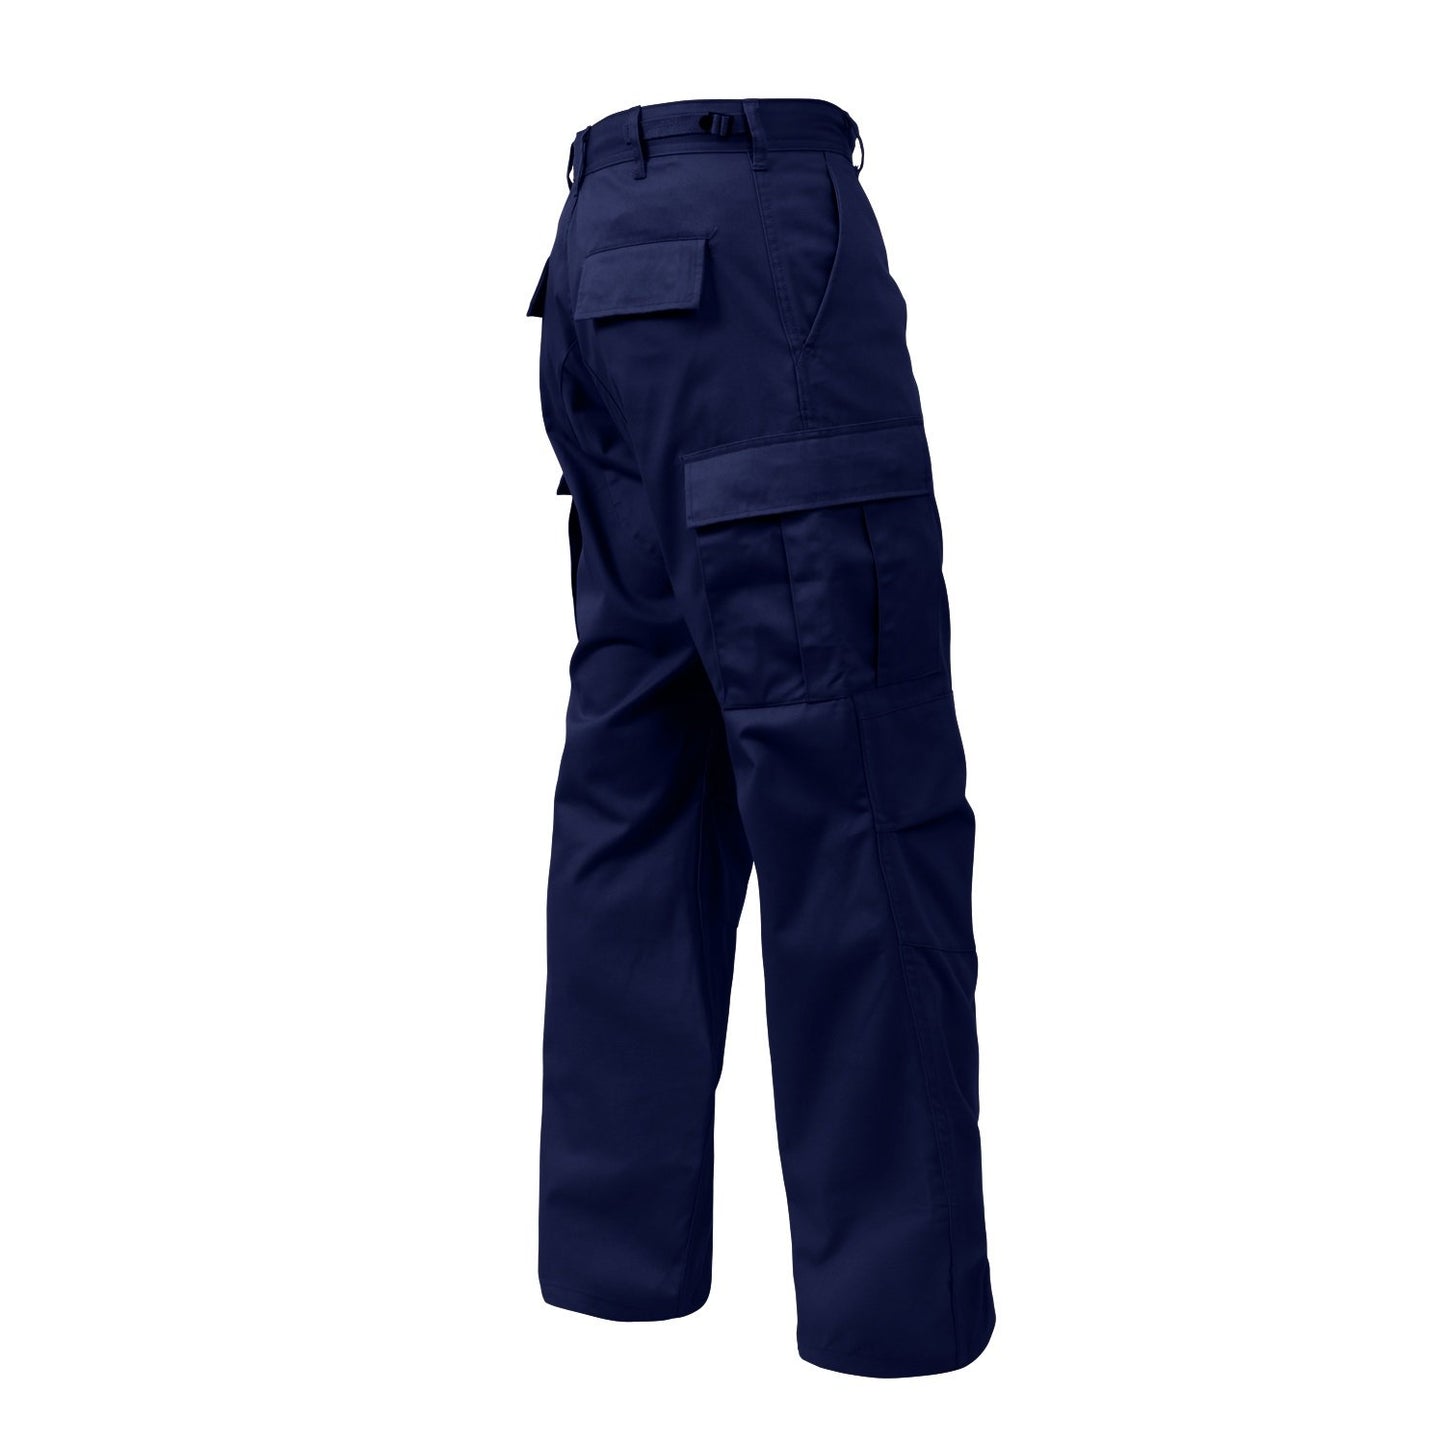 5776 - Zip Fly Uniform Pant